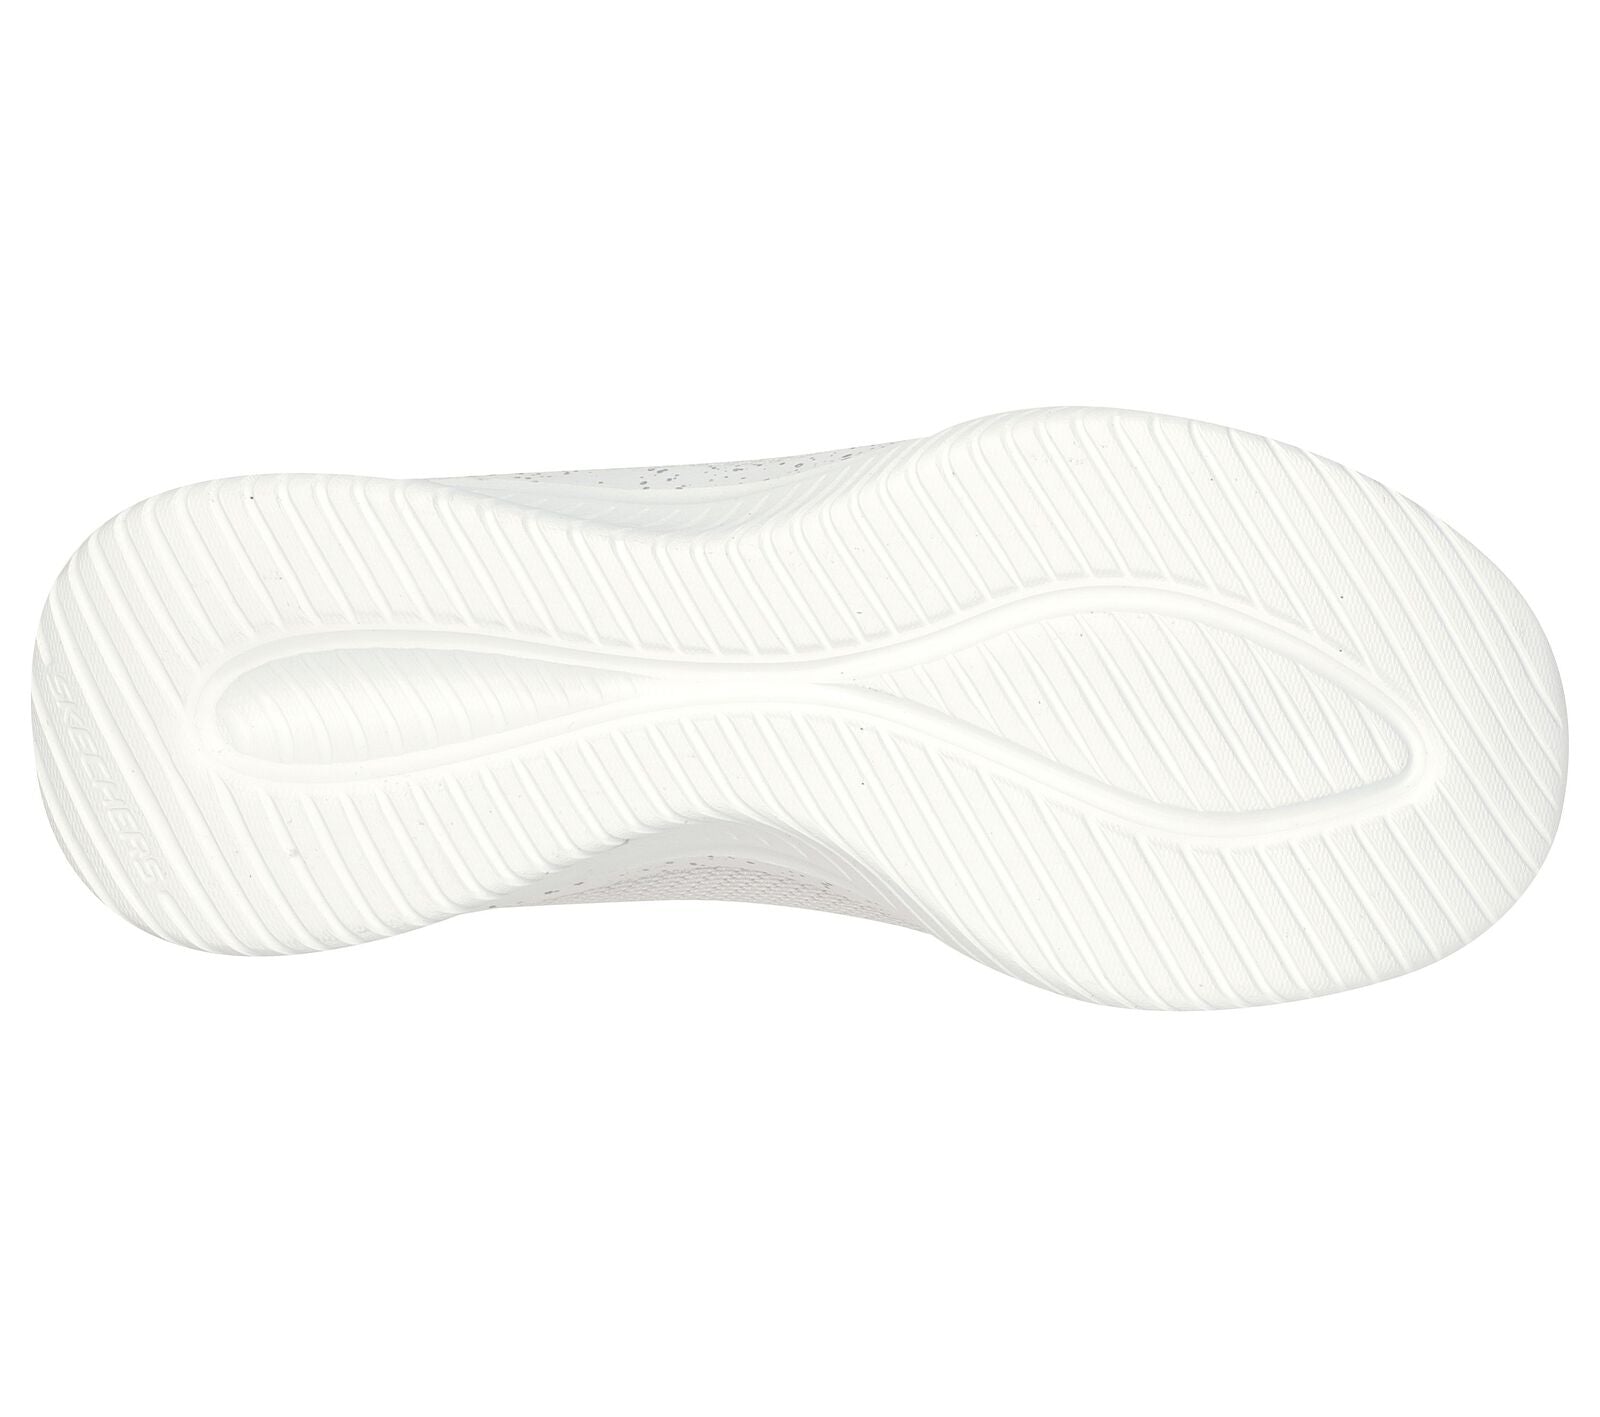 Skechers 149851 Ultra Flex 3.0 New Horizons Ladies White Textile Vegan Lace Up Trainers